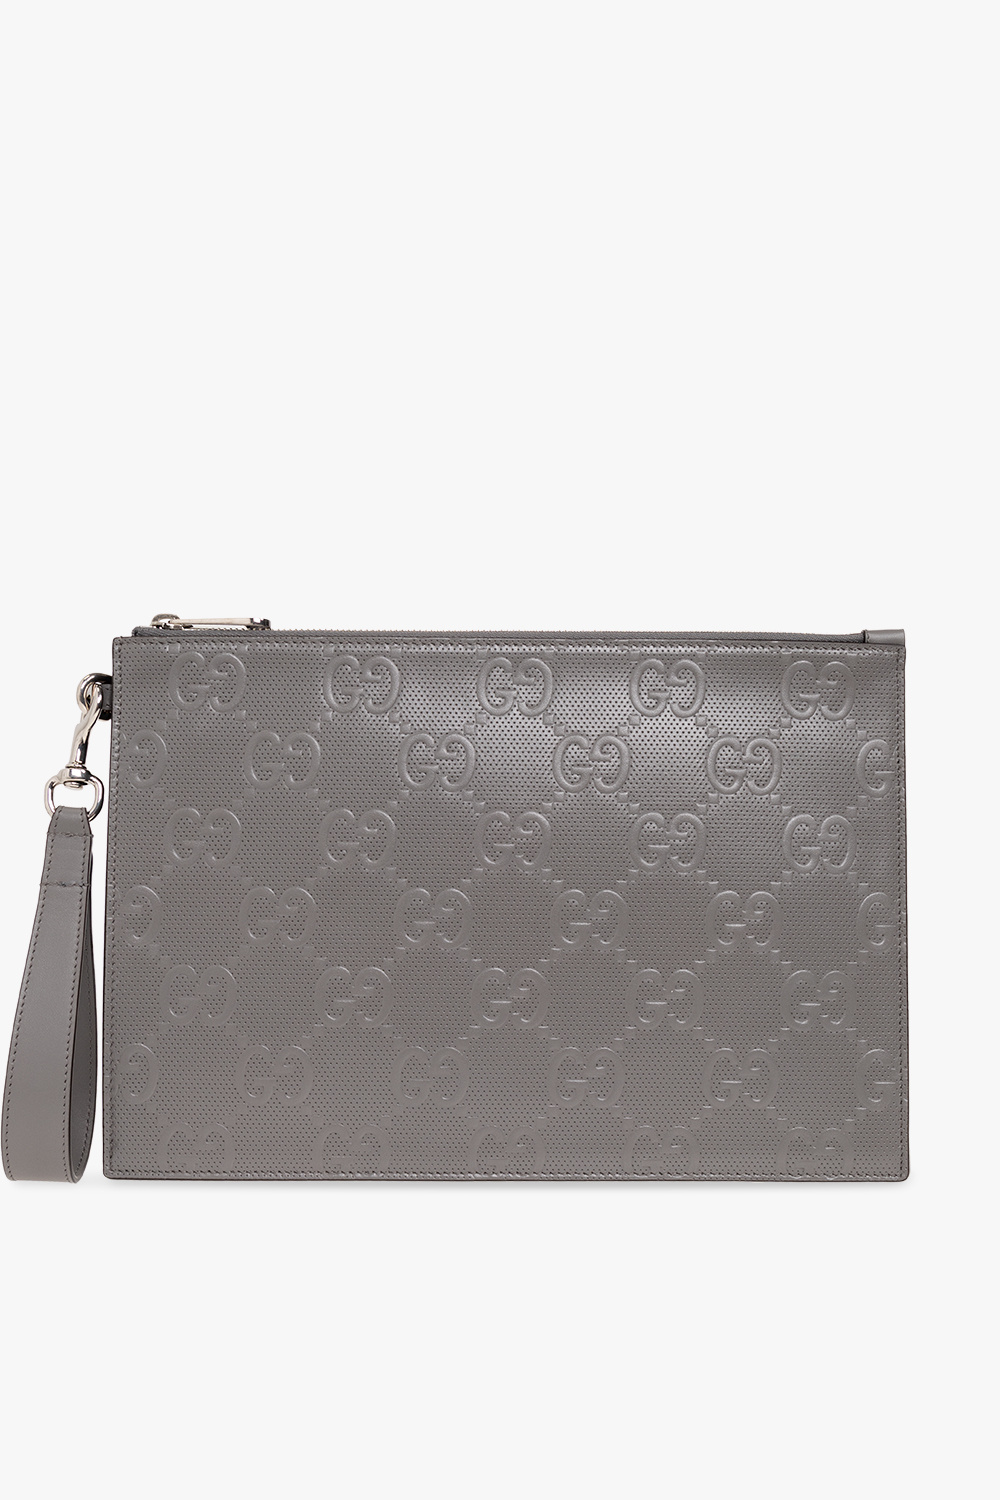 Gucci Signature Backpack Monogram GG Front Zipper Pocket/Embossed